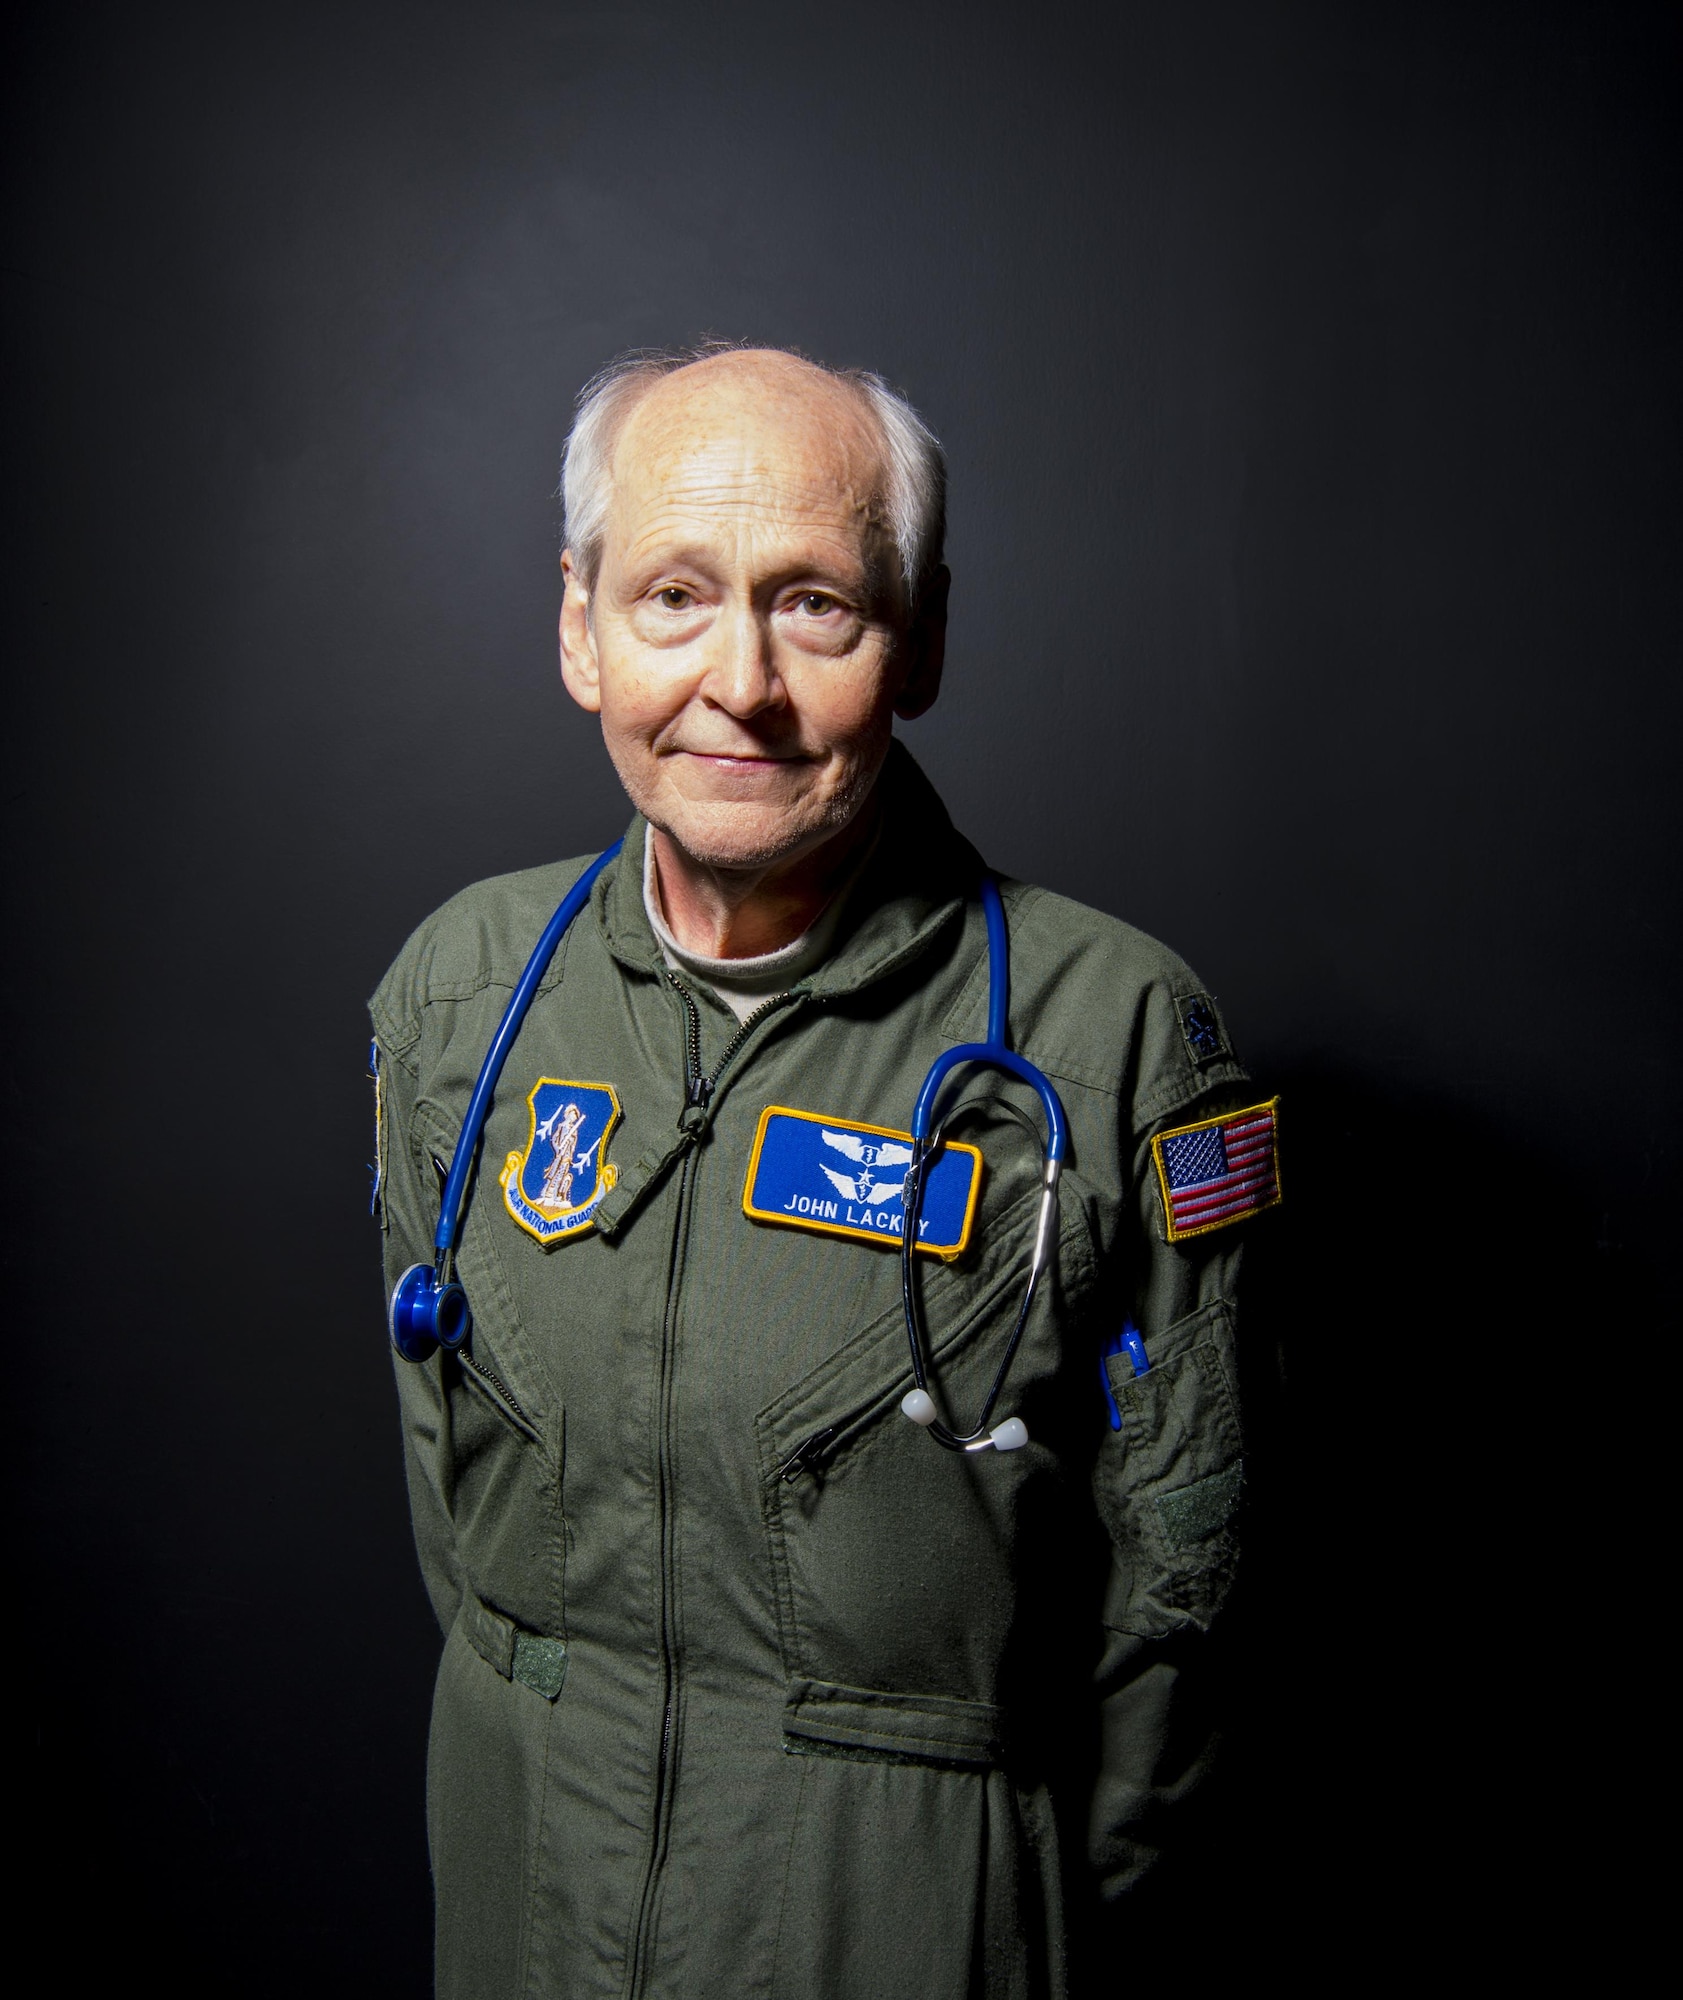 Photo of Lt. Col. John Lackey, Flight Physician for the 130th Medical Group, McLaughlin Air National Guard Base, Charleston, W.Va.